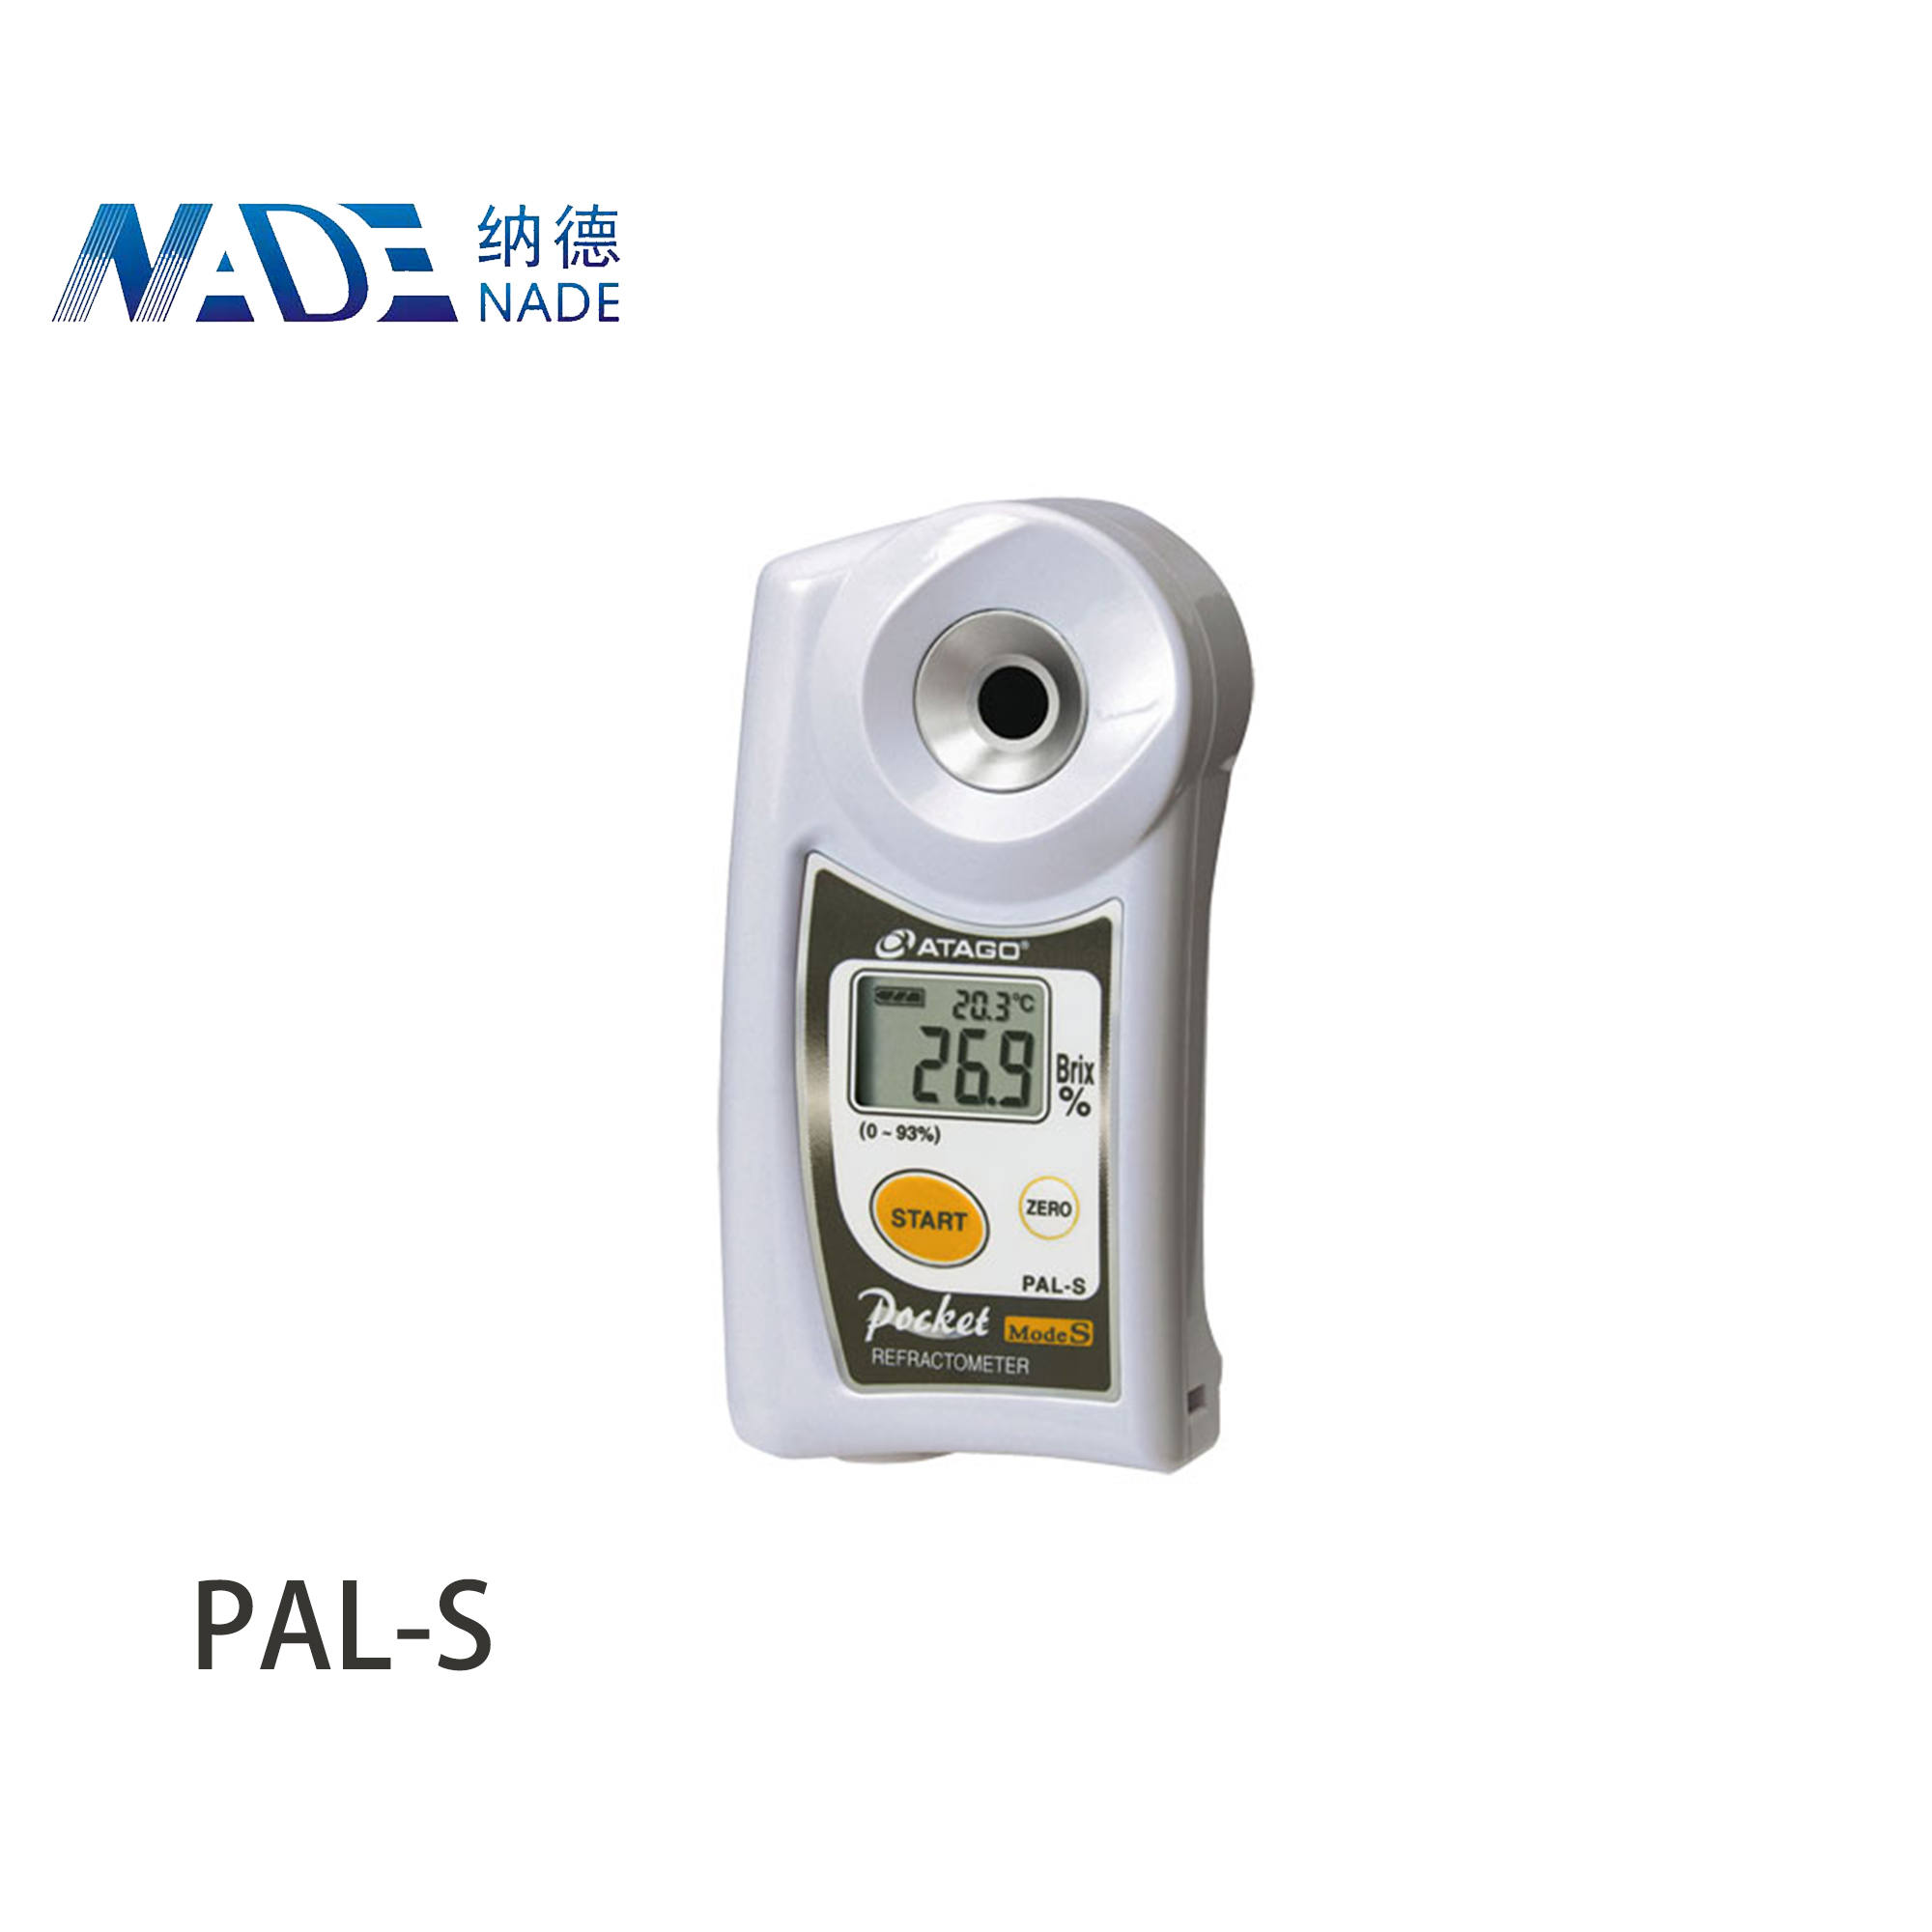 PAL-S Digital Atago refractometer (polarimeter) hand held "Pocket" auto refractometer for milky sample